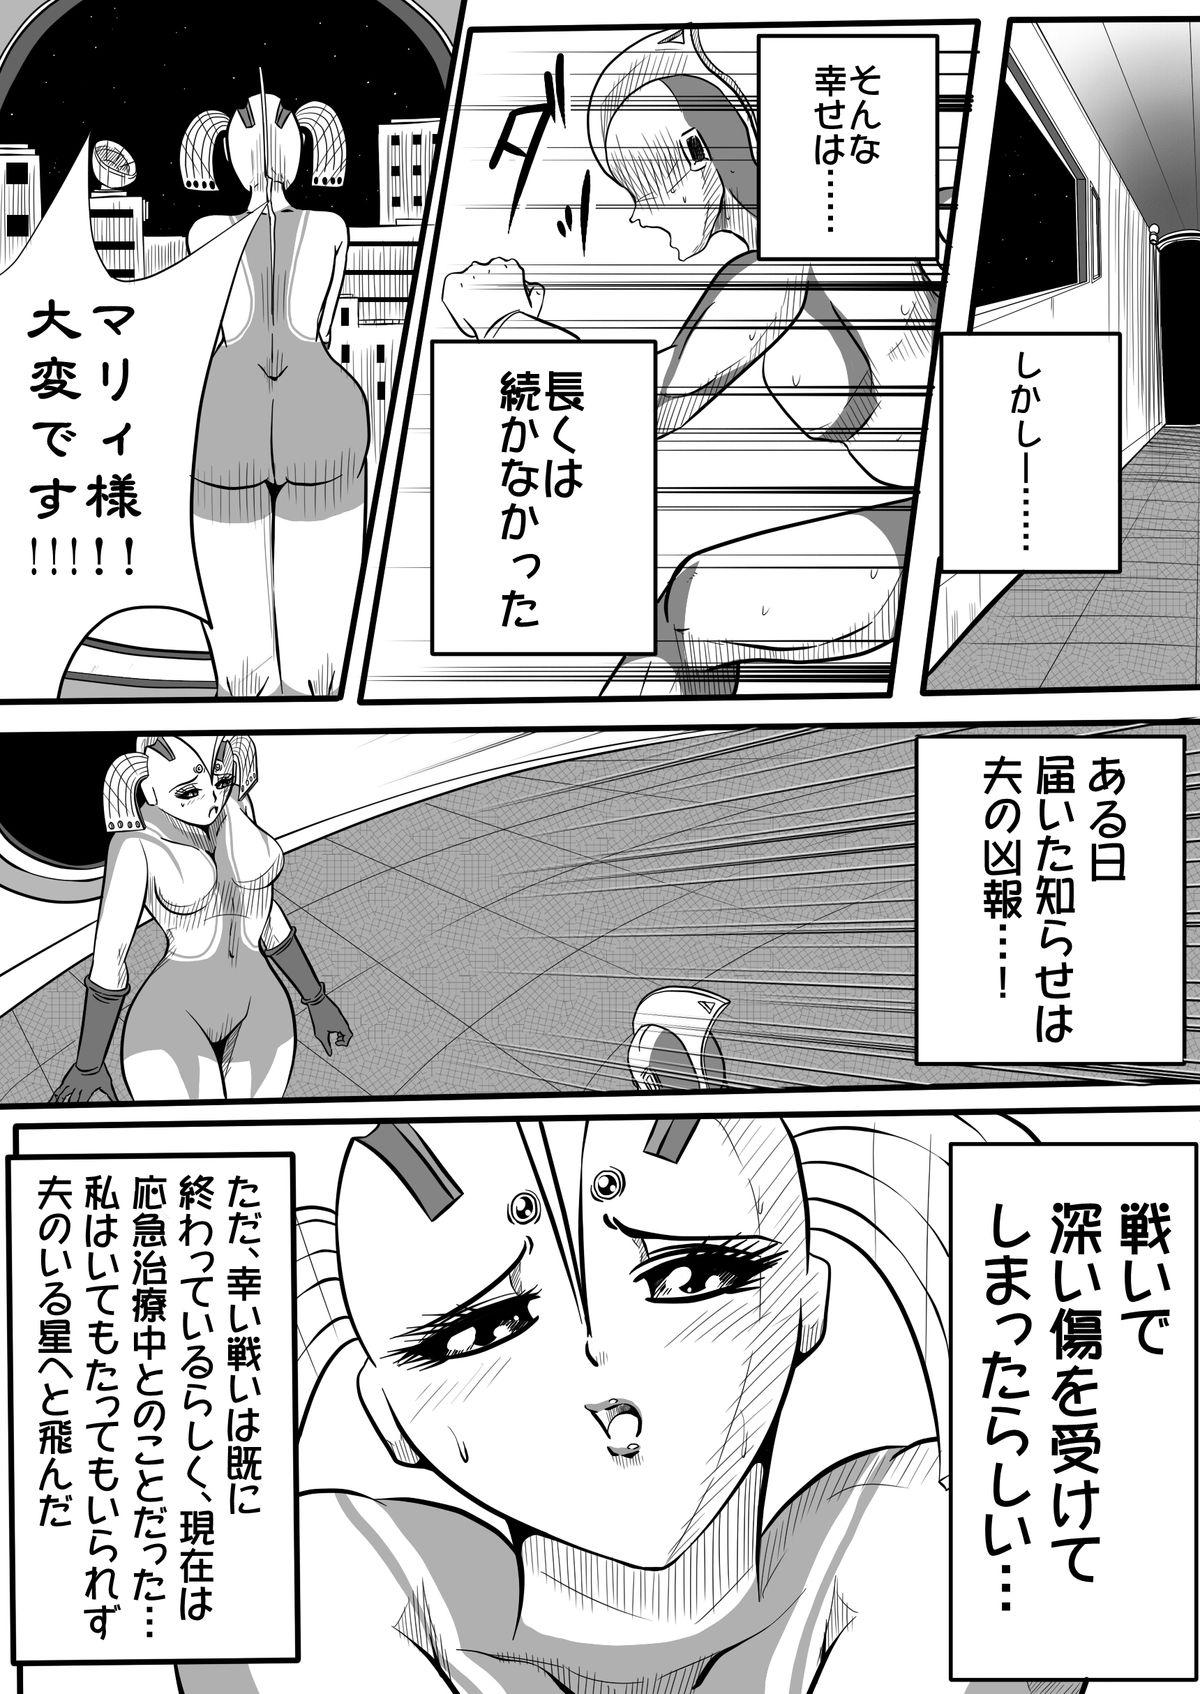 Safadinha Ultra Mairi Monogatari 2 - Shade no Erona Hon IV - Ultraman Free Amatuer - Page 7